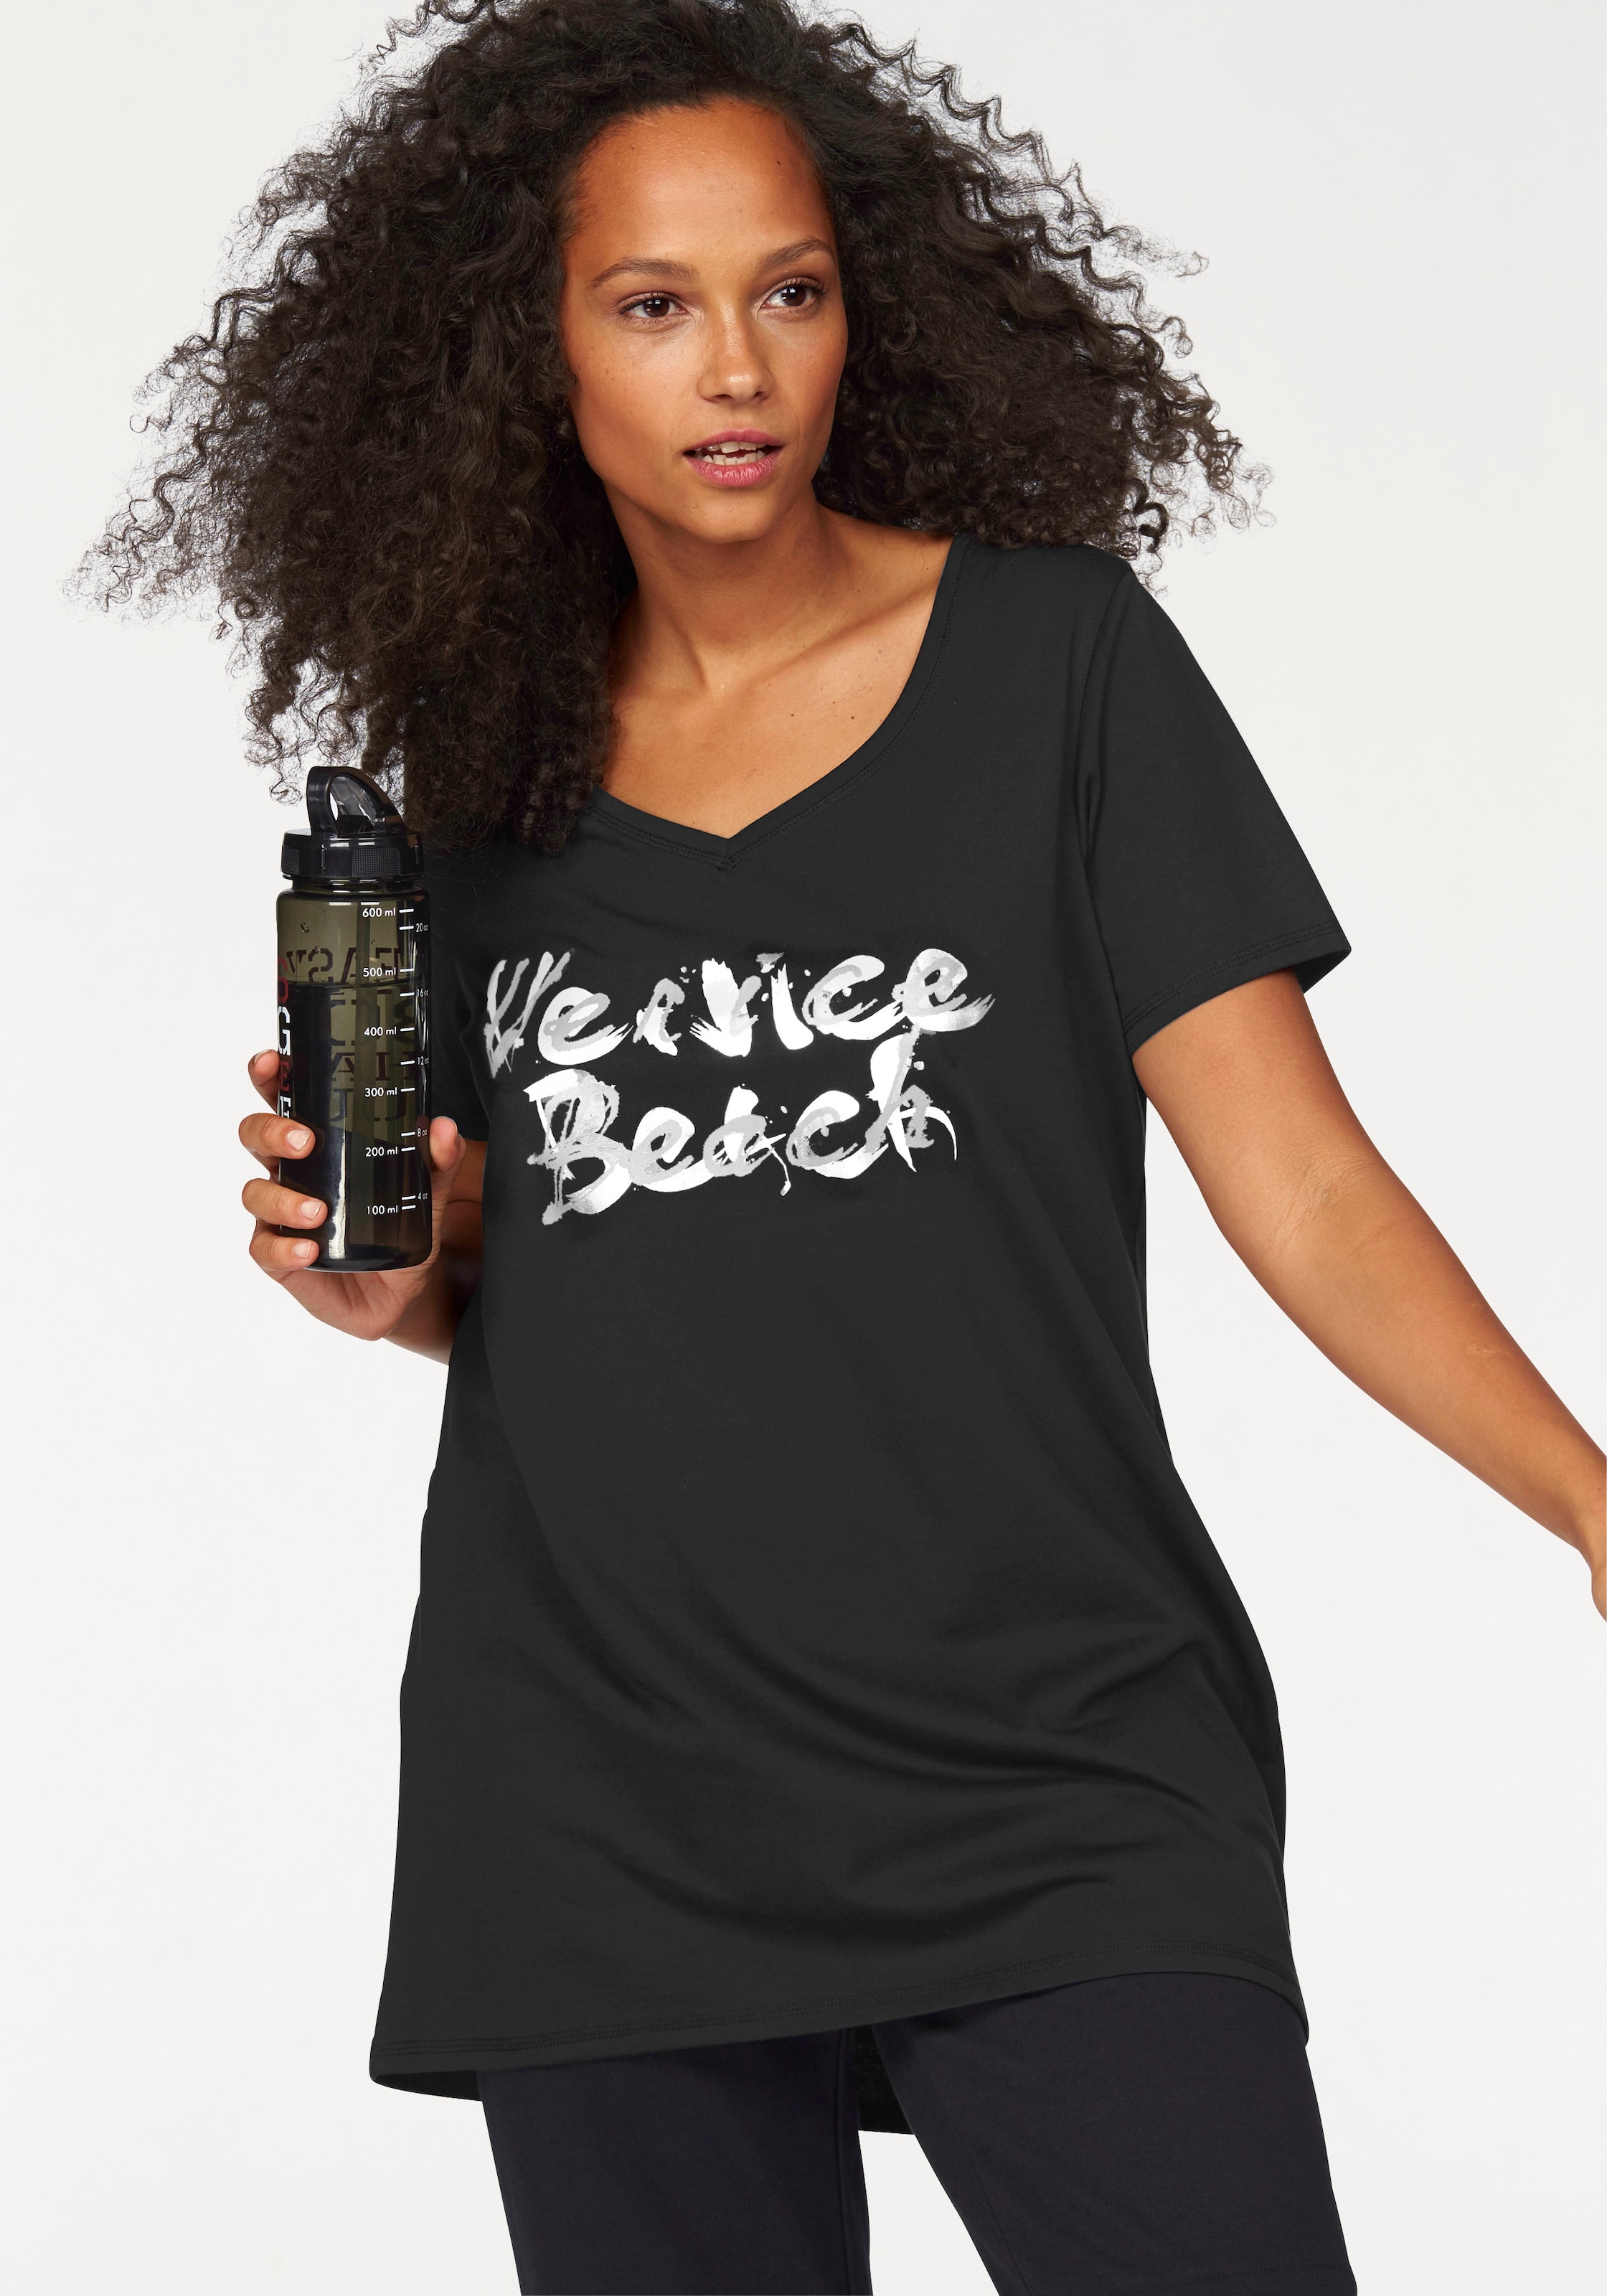 bei Grössen Jelmoli-Versand Venice online Beach kaufen Longshirt, Schweiz Grosse